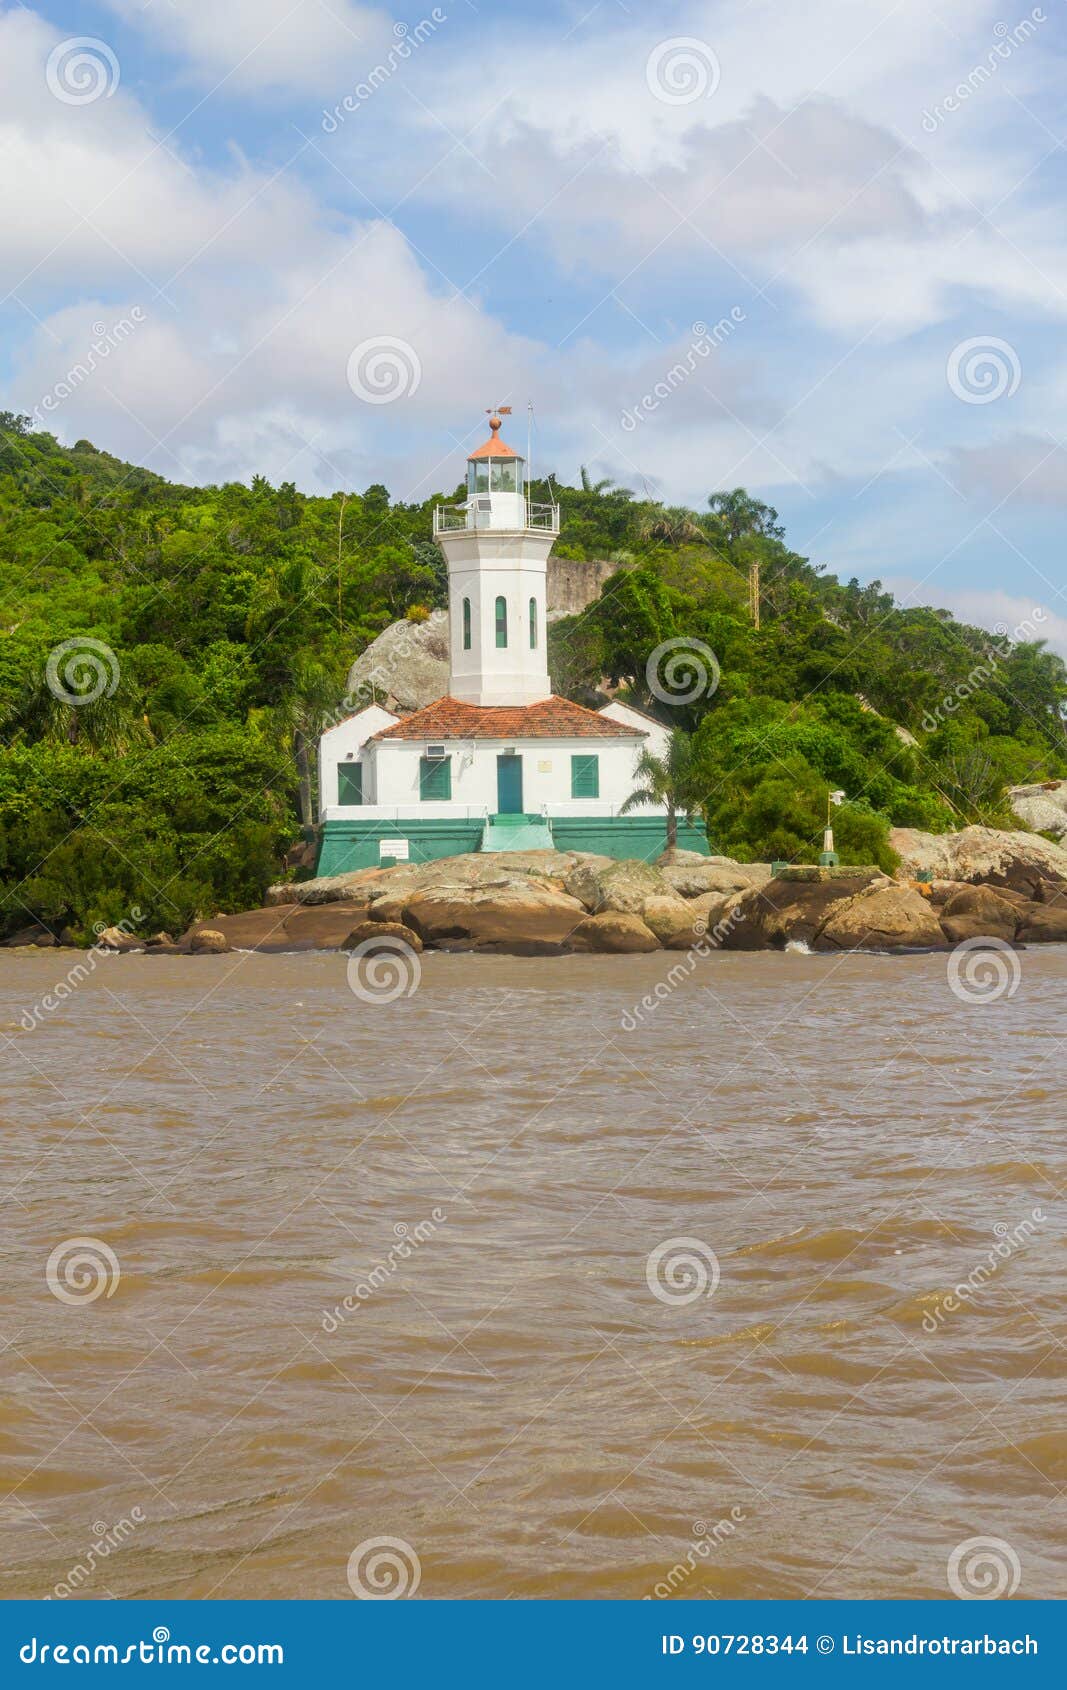 itapua lighthouse in guaiba lake